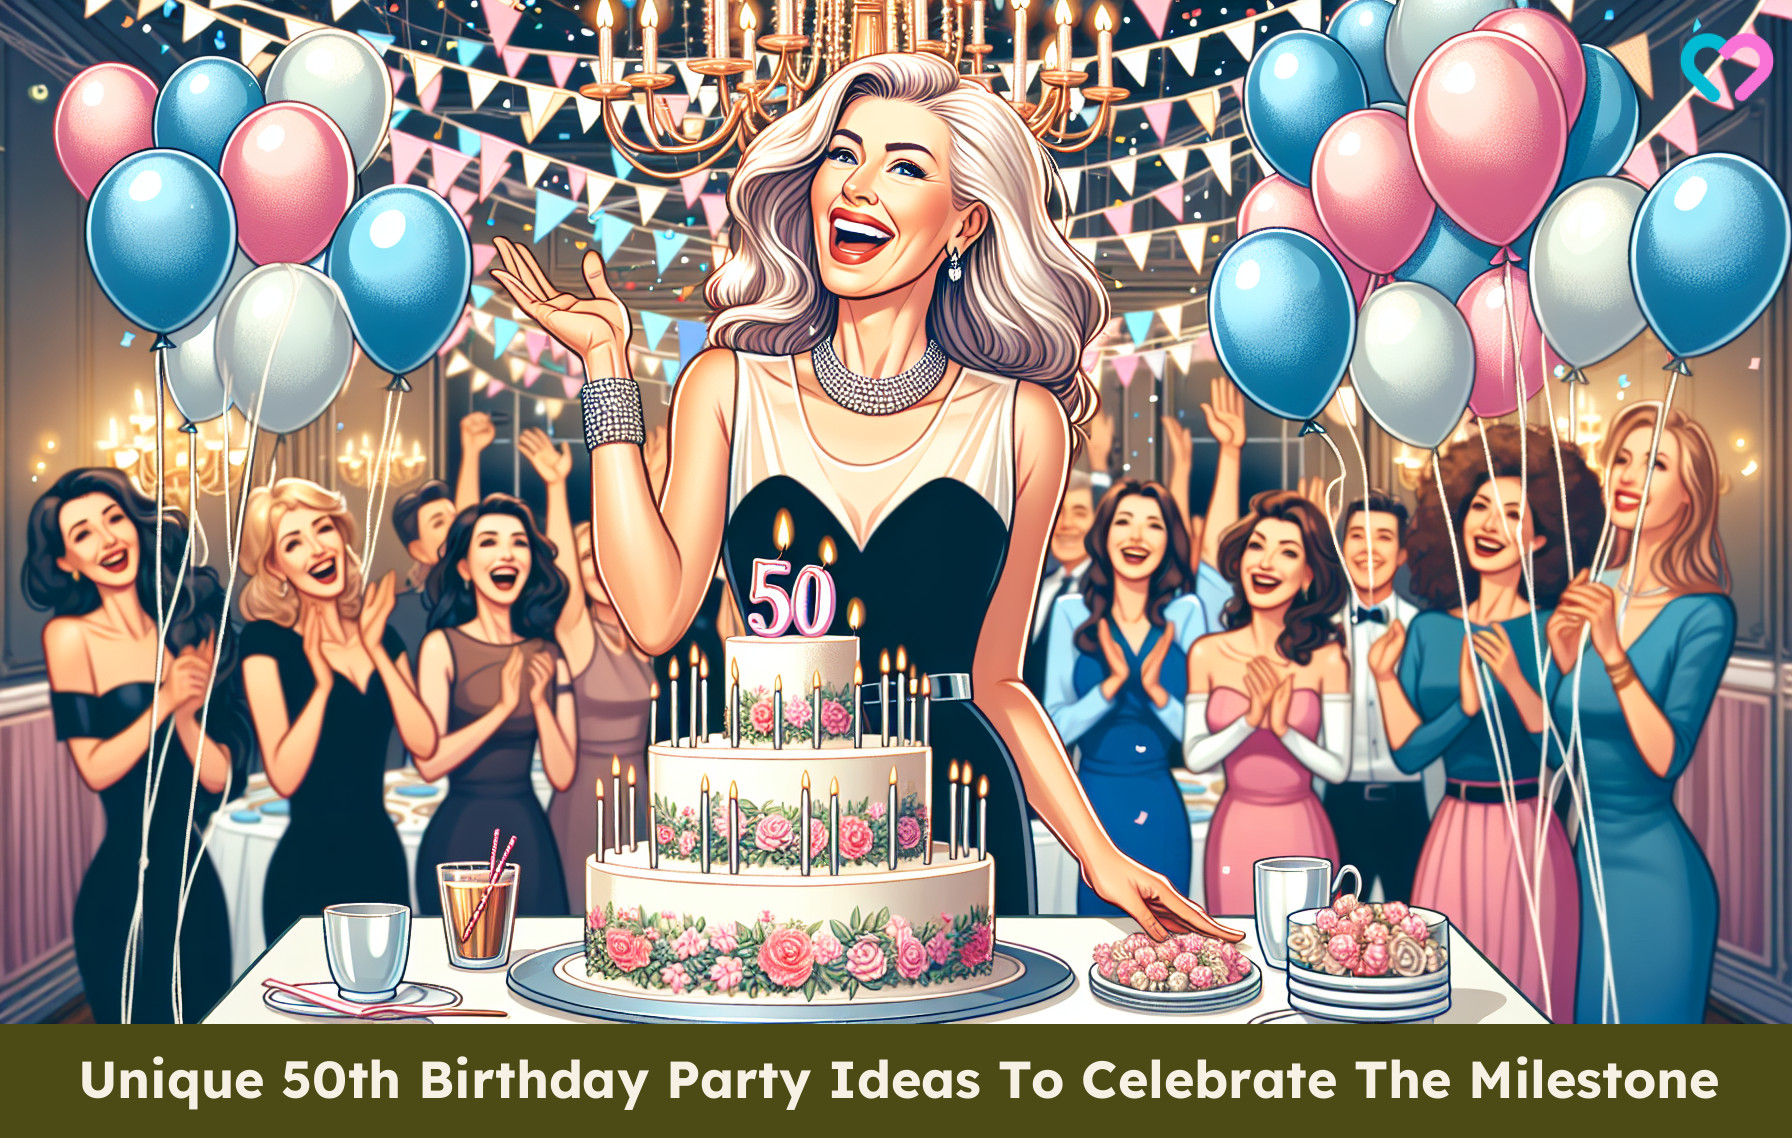 50th birthday party_illustration